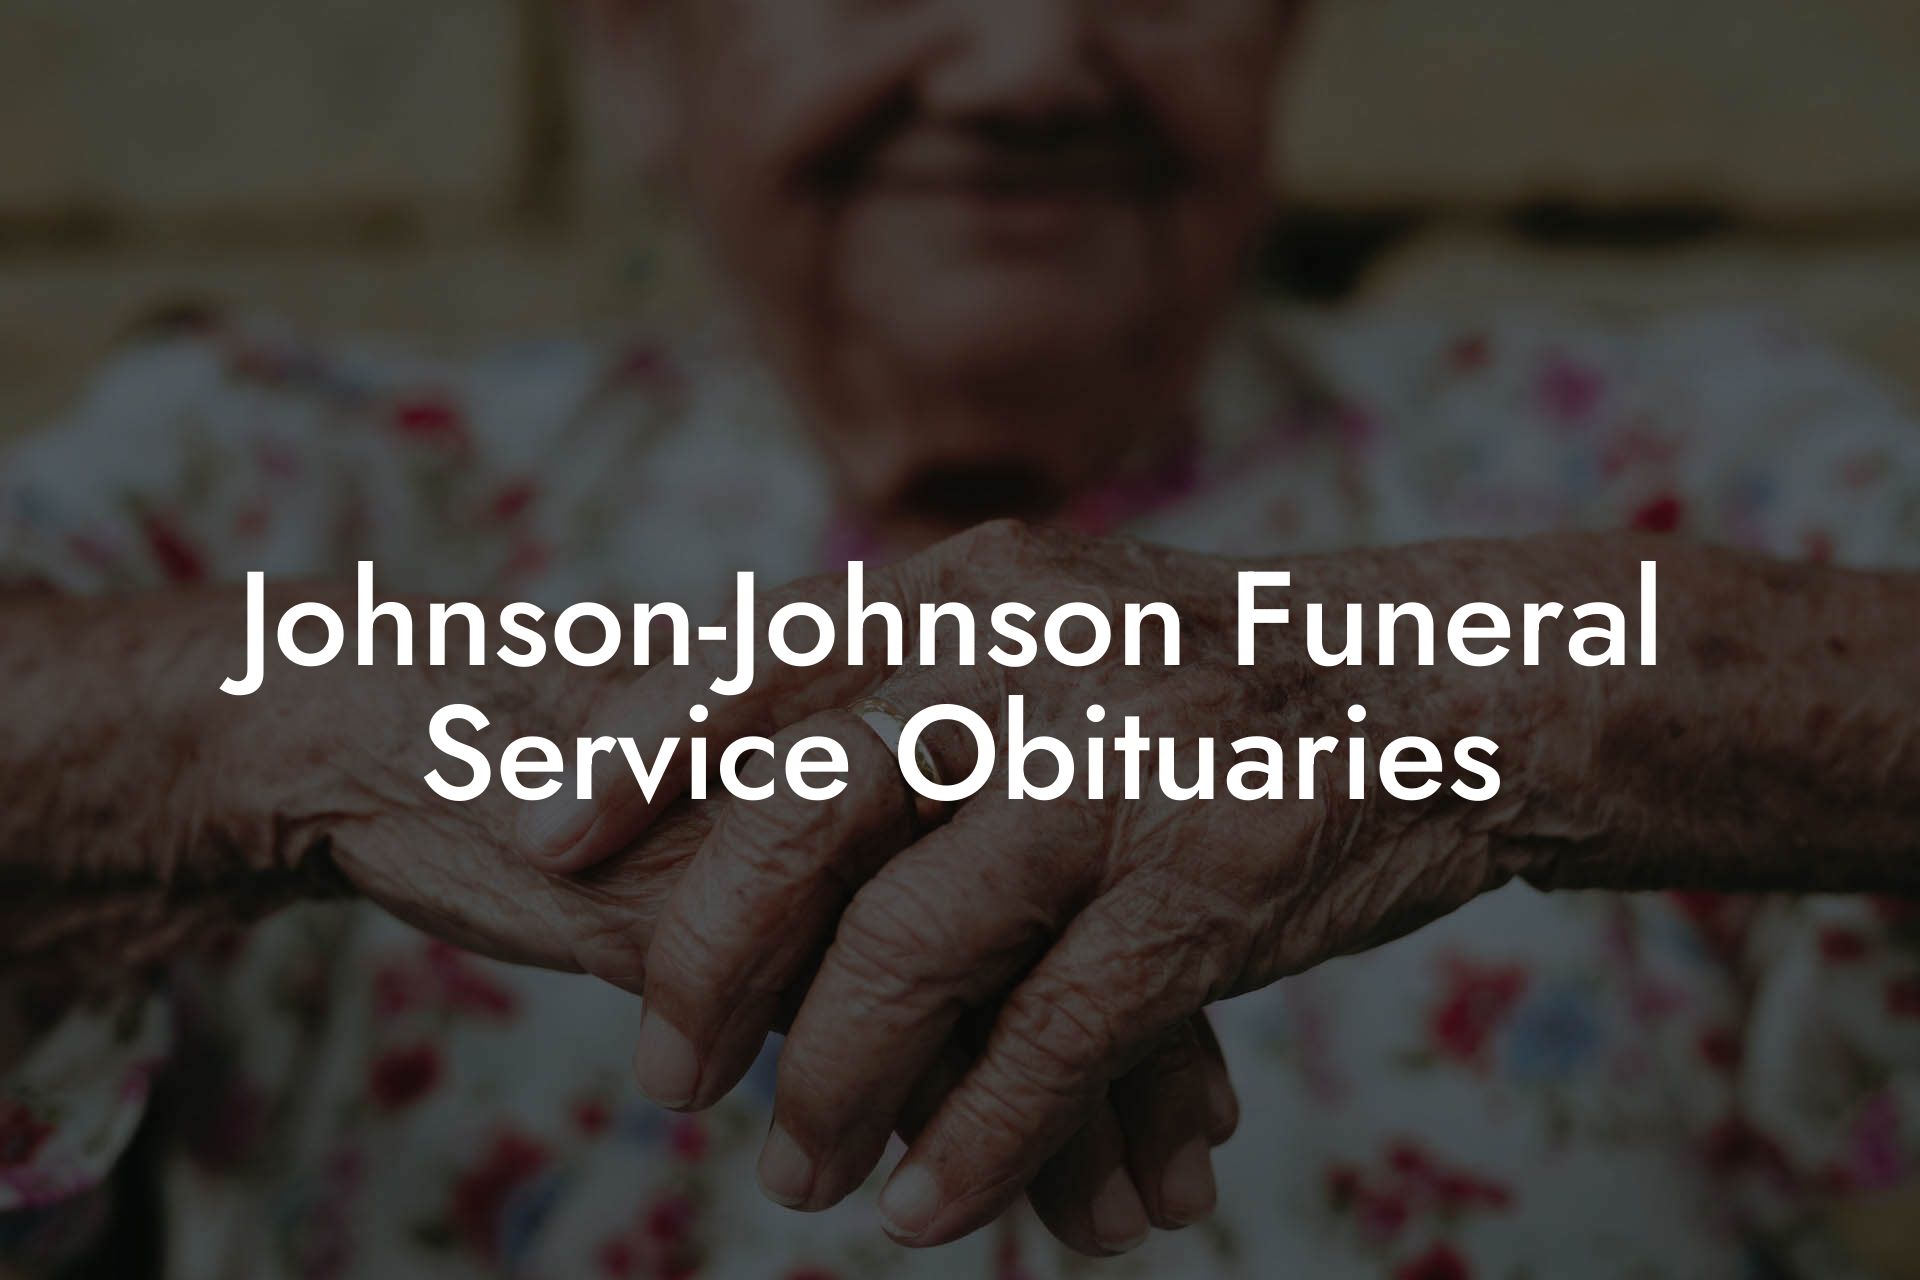 Johnson-Johnson Funeral Service Obituaries